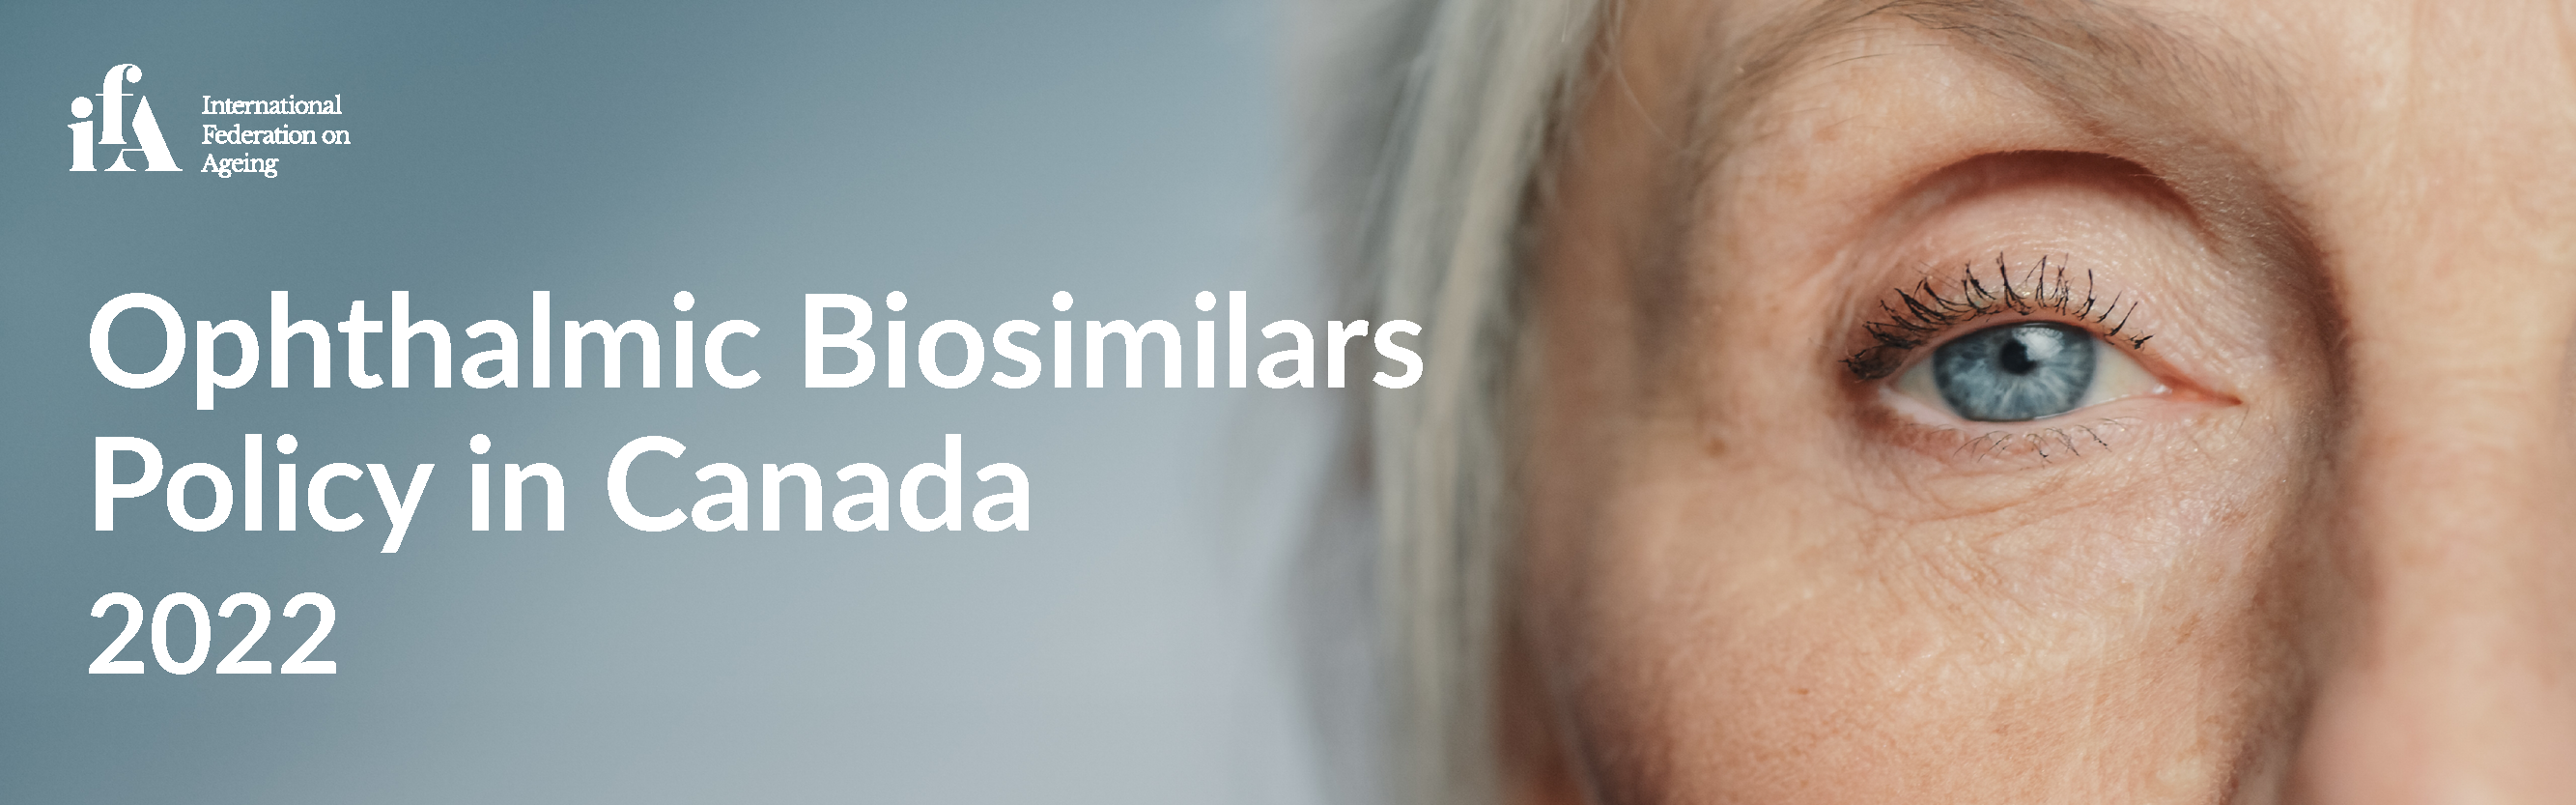 Biosimilars Policy in Canada 2022 banner